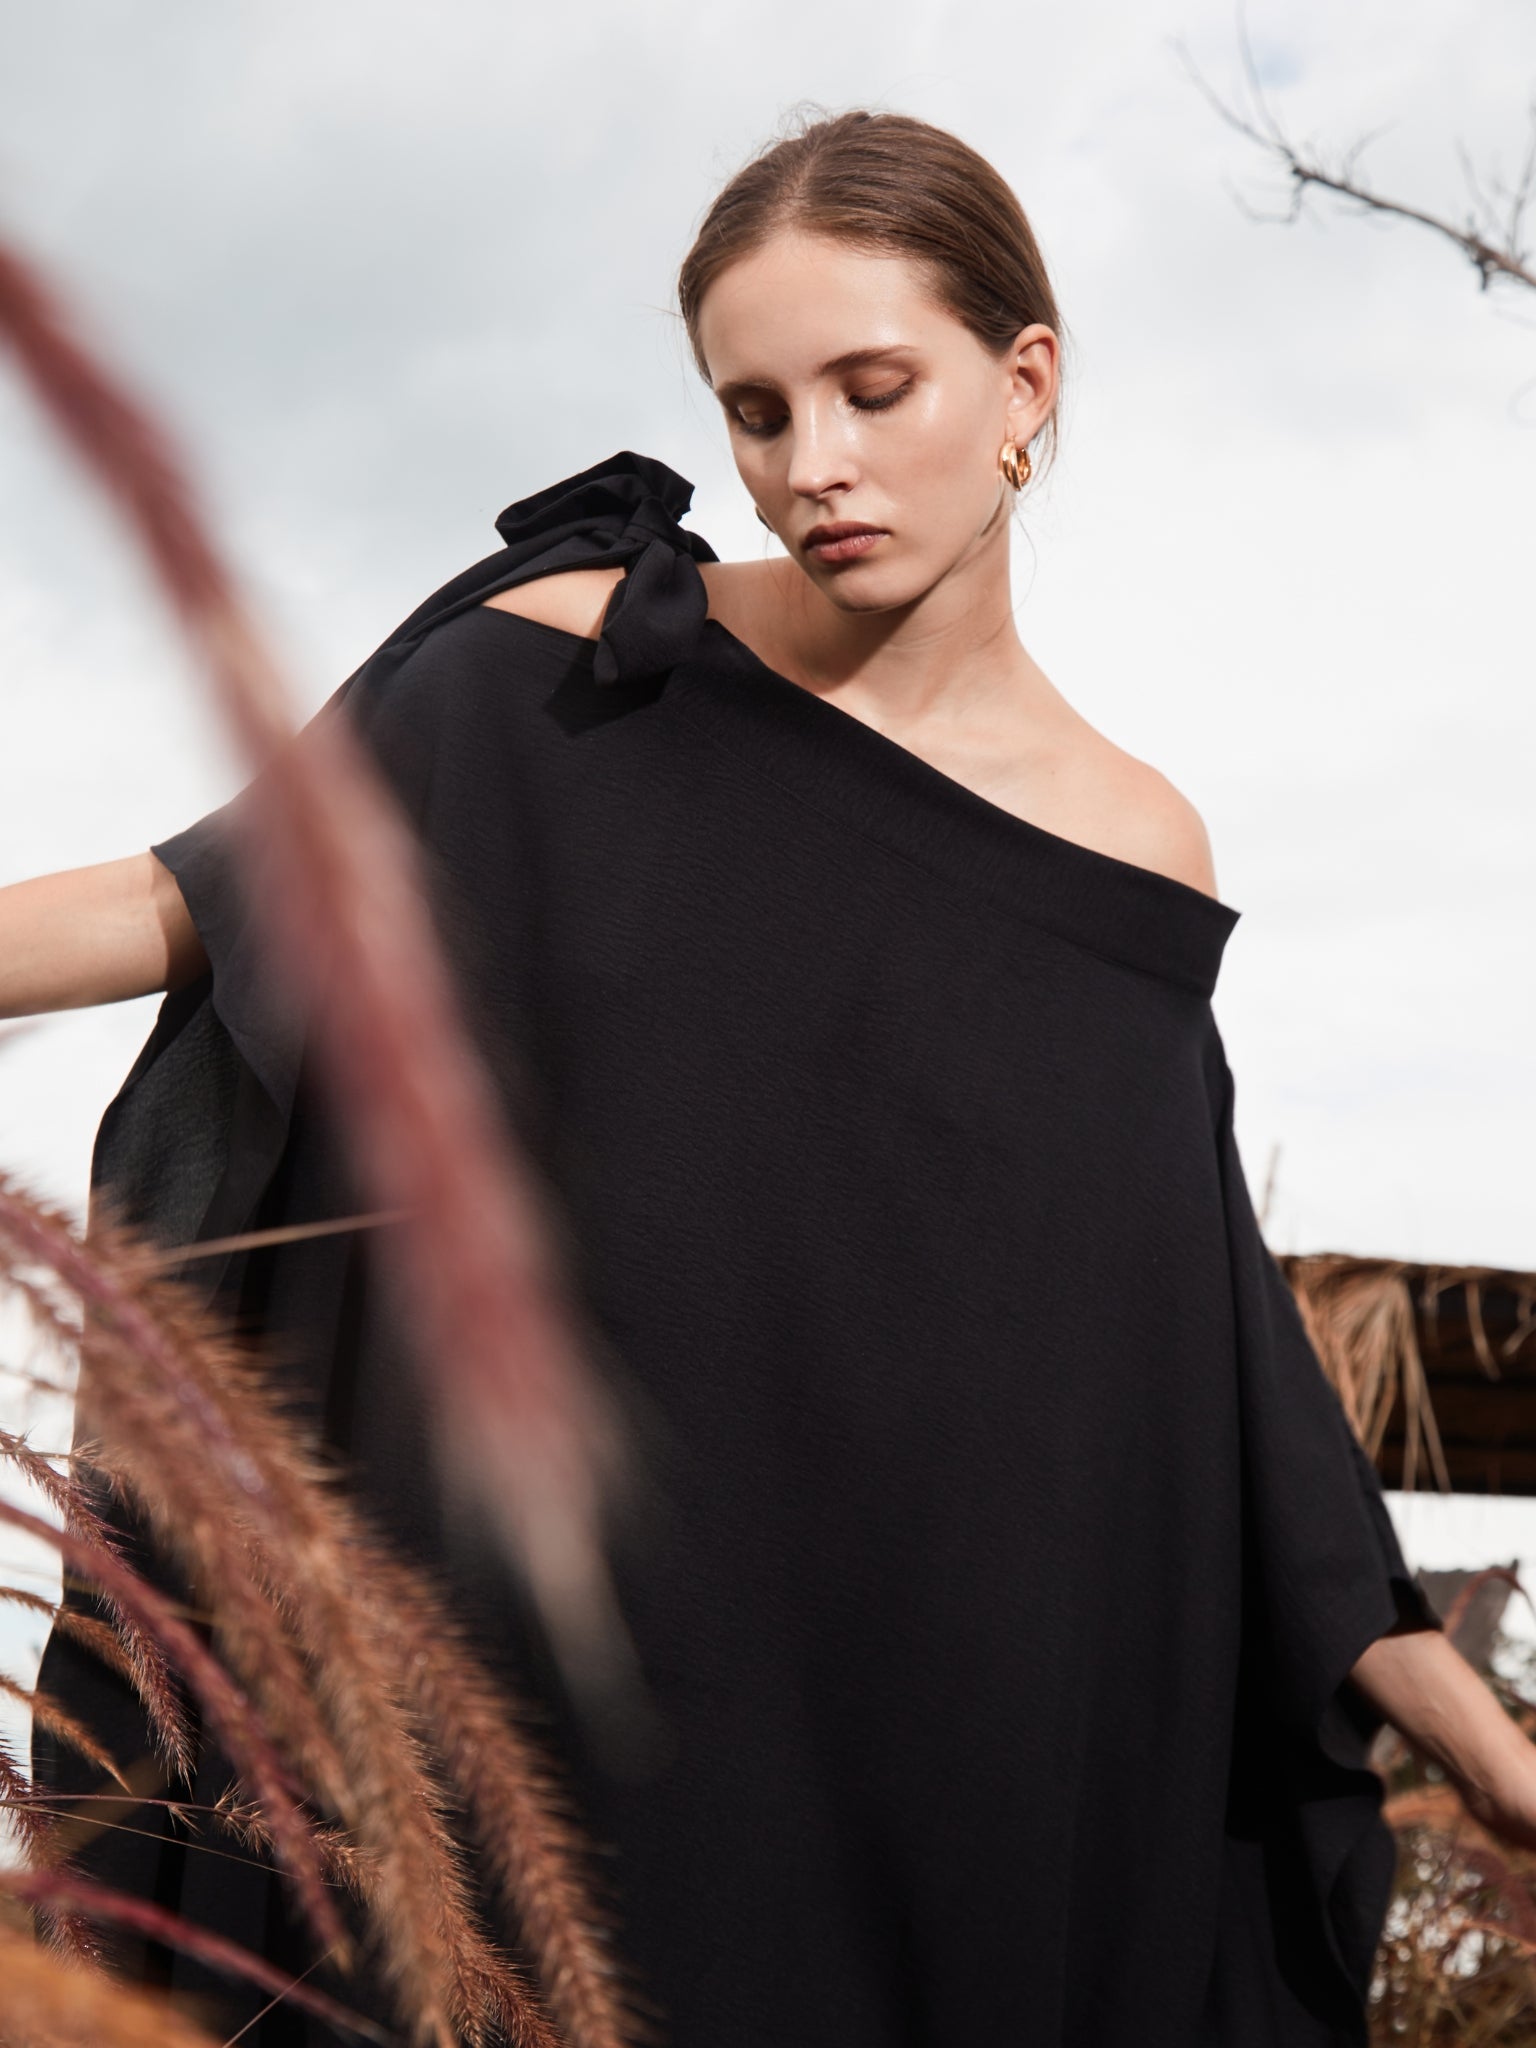 Shop minimalist black kaftan, off shoulder maxi dress, eco friendly fabric, elegant style for everyday vacay